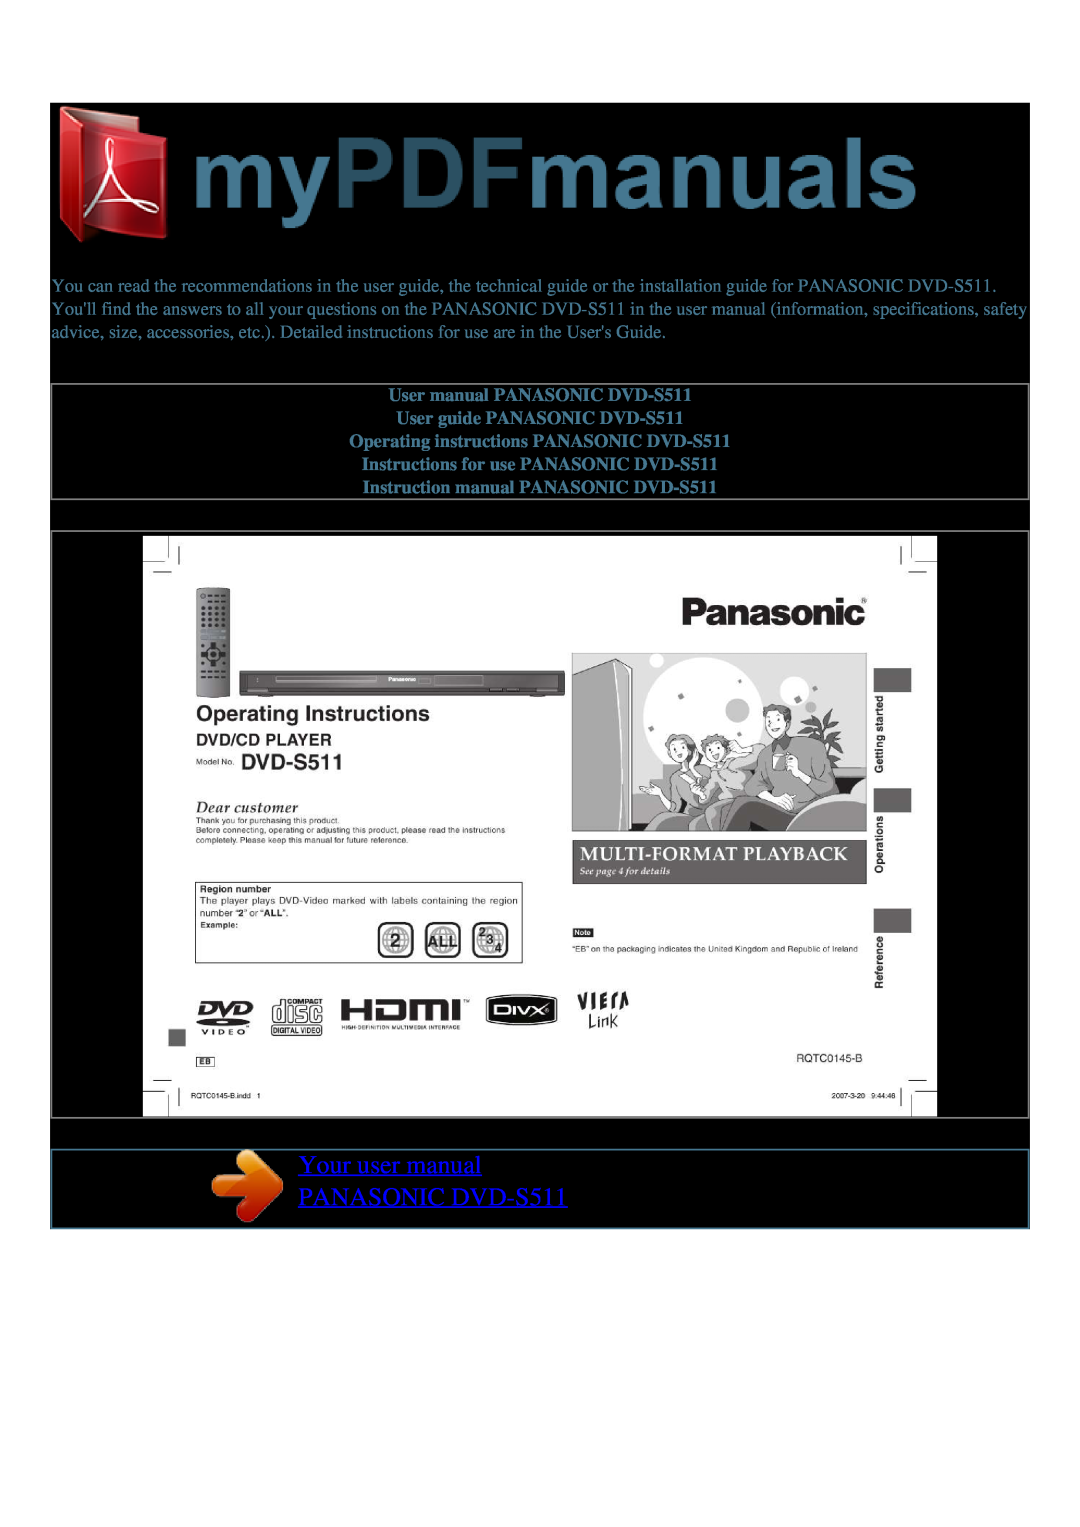 Panasonic user manual Your user manual PANASONIC DVD-S511, Operating instructions PANASONIC DVD-S511 